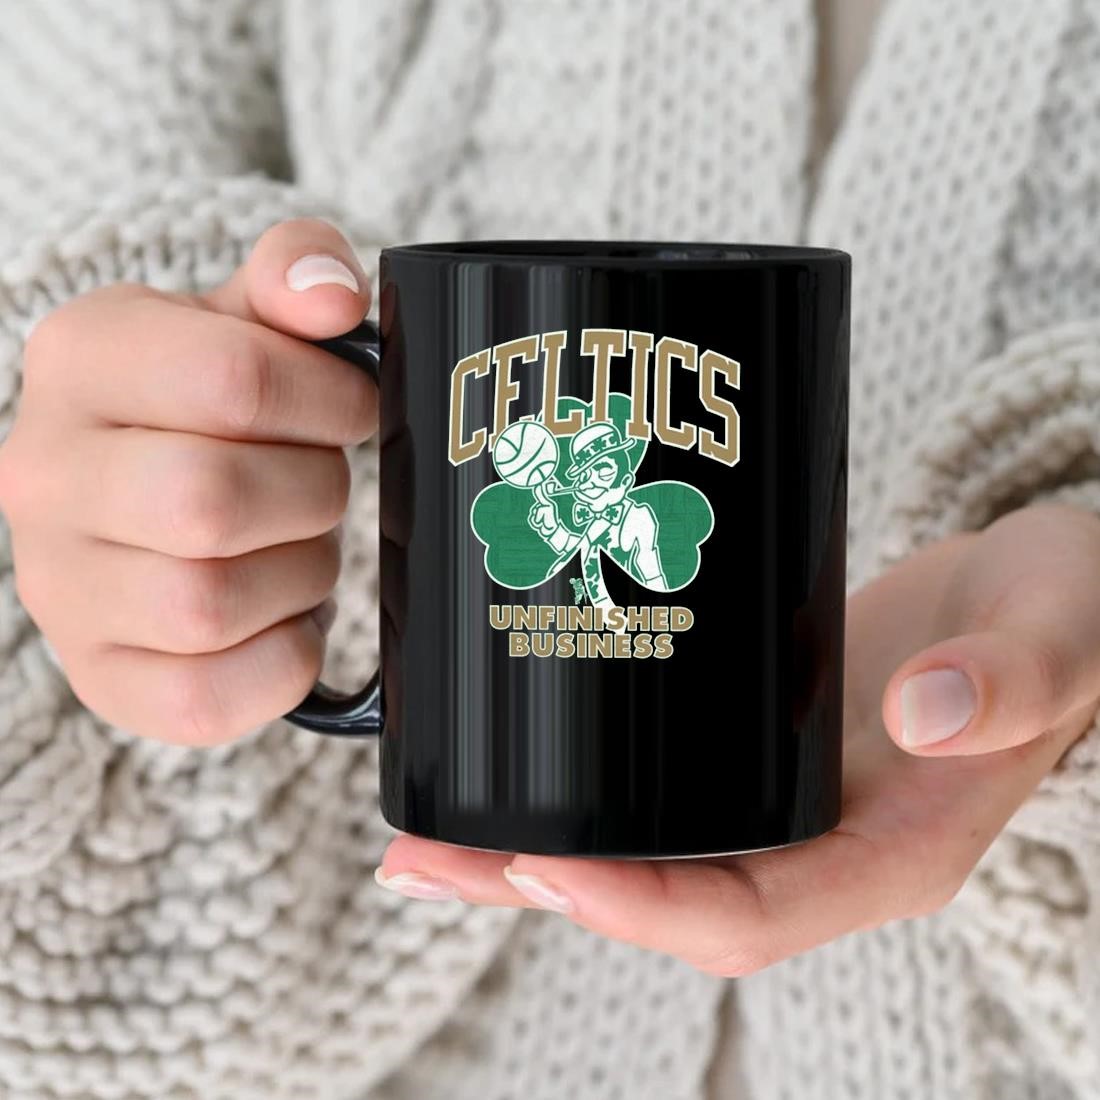 Original Nba Boston Celtics Unfinished Business Mug